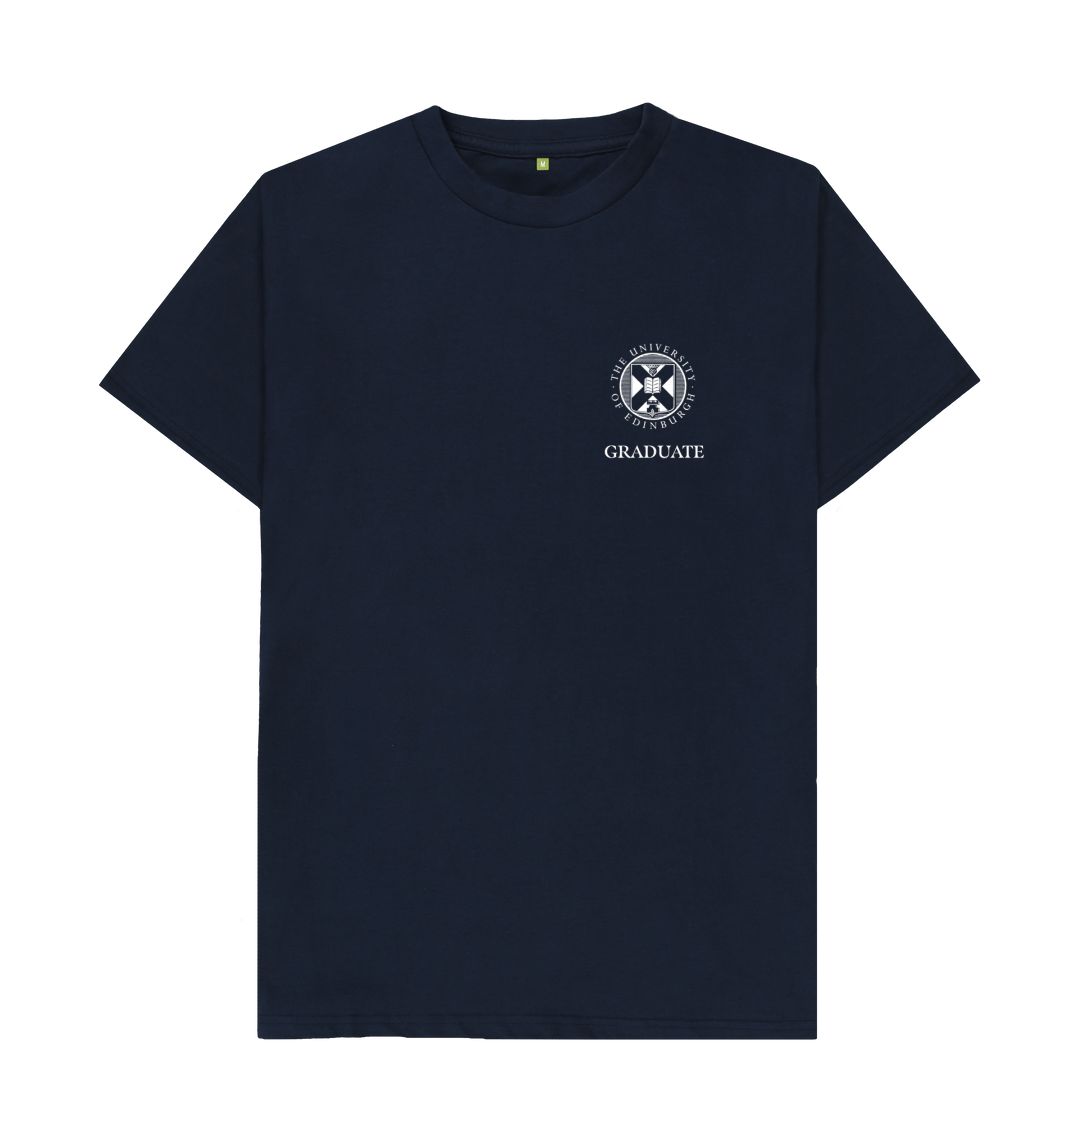 Navy Blue Edinburgh Medical School 'Class Of' Graduate T-Shirt